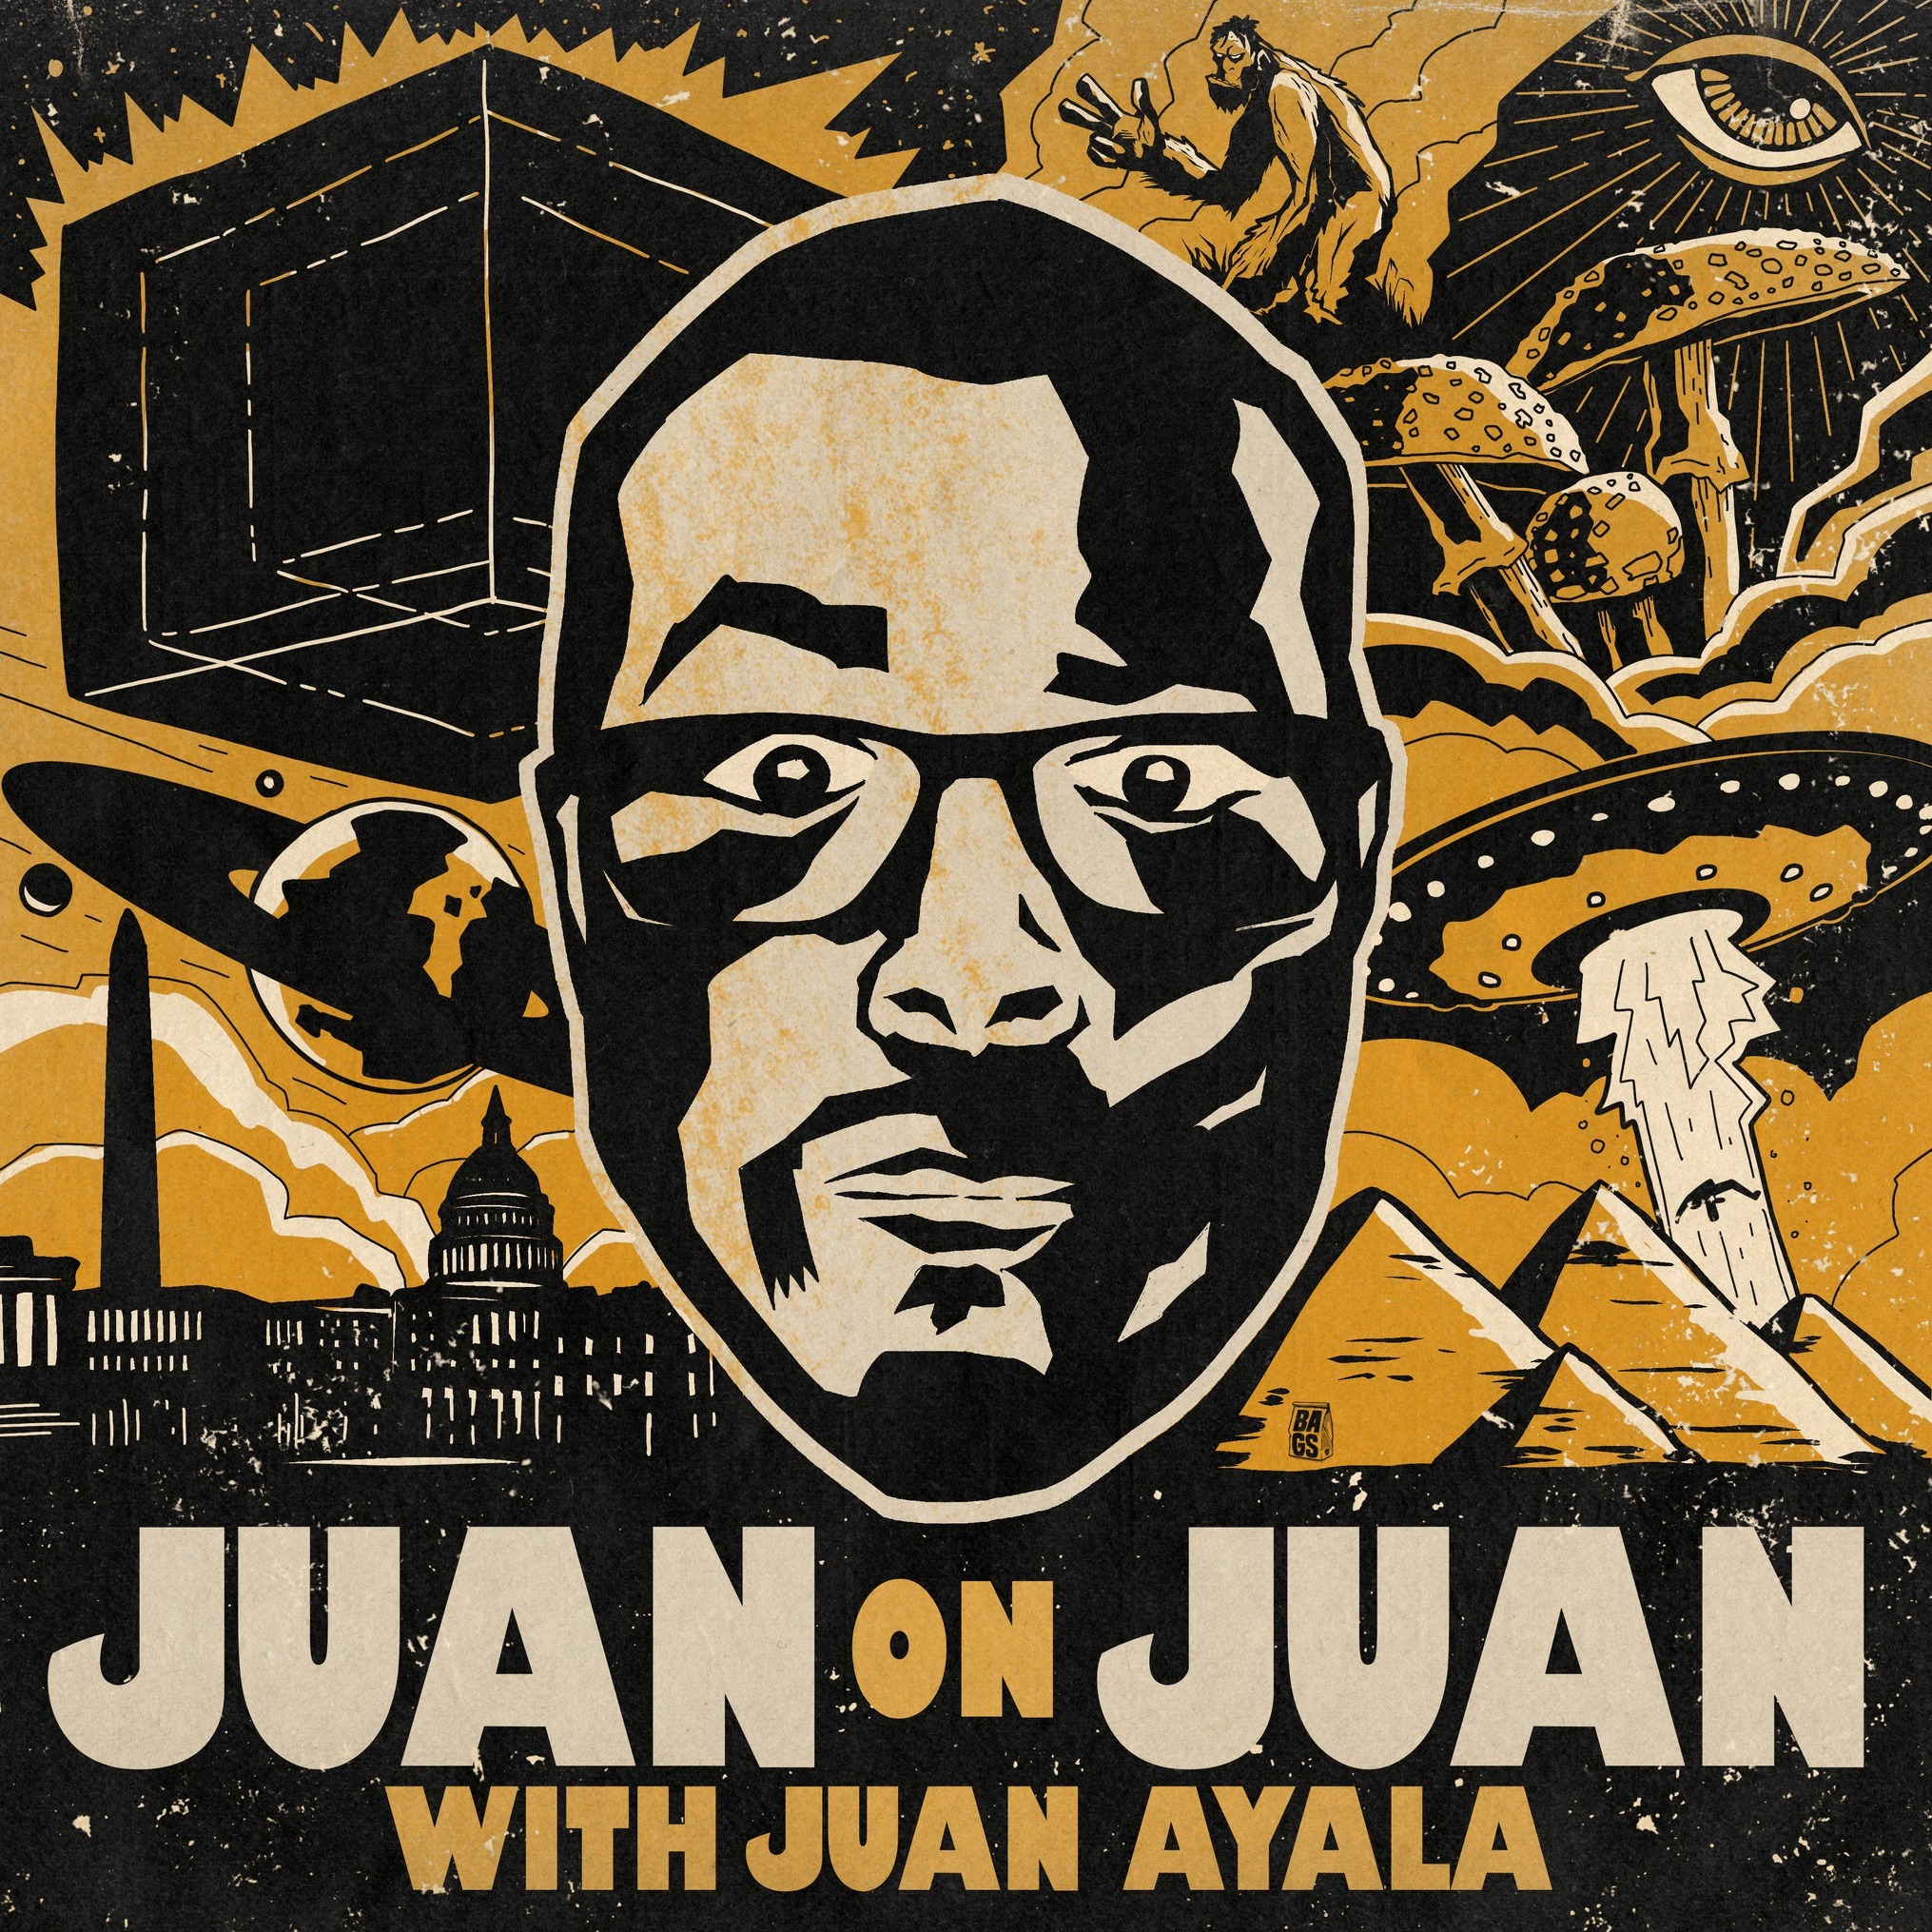 The Juan On Juan Podcast